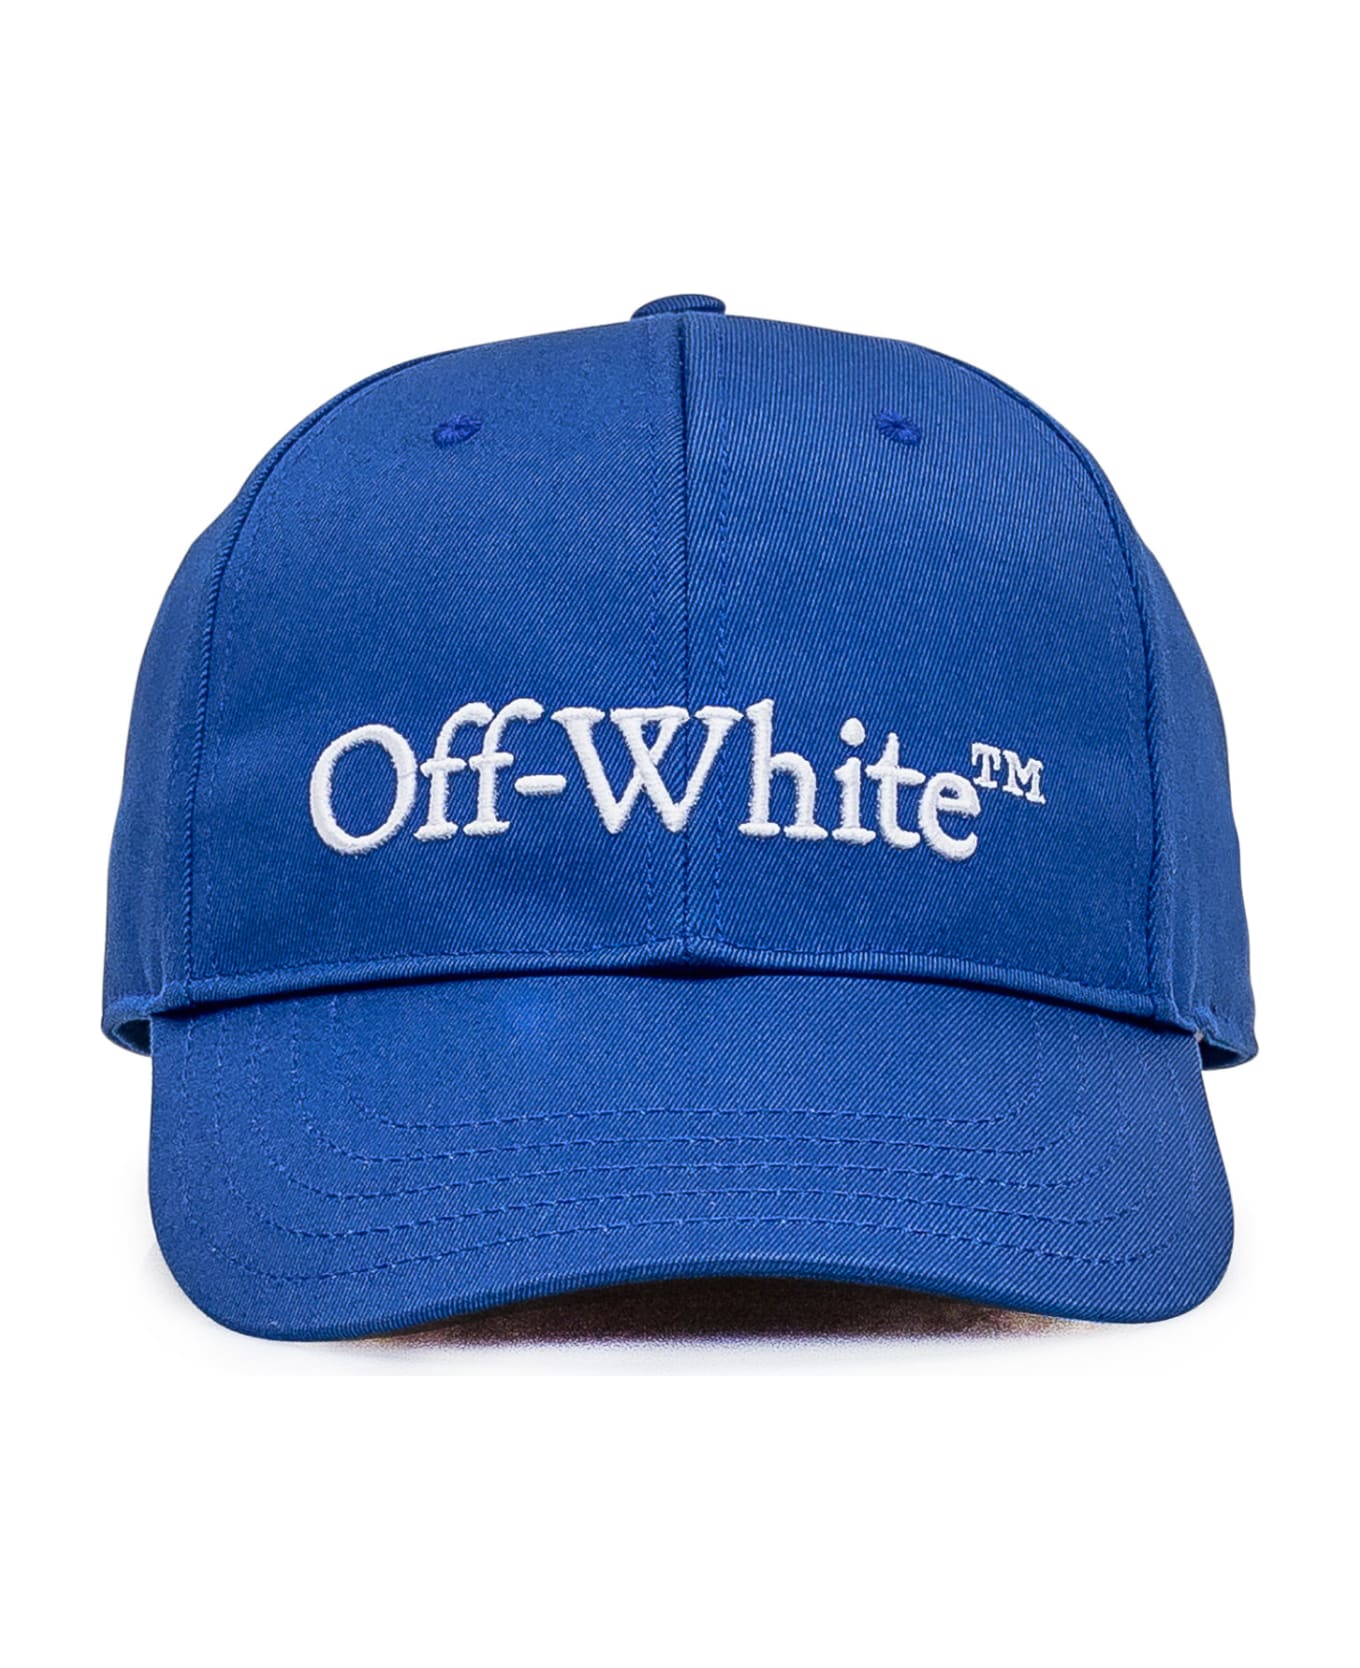 Off-White Baseball Cap - NAUTICAL BLUE